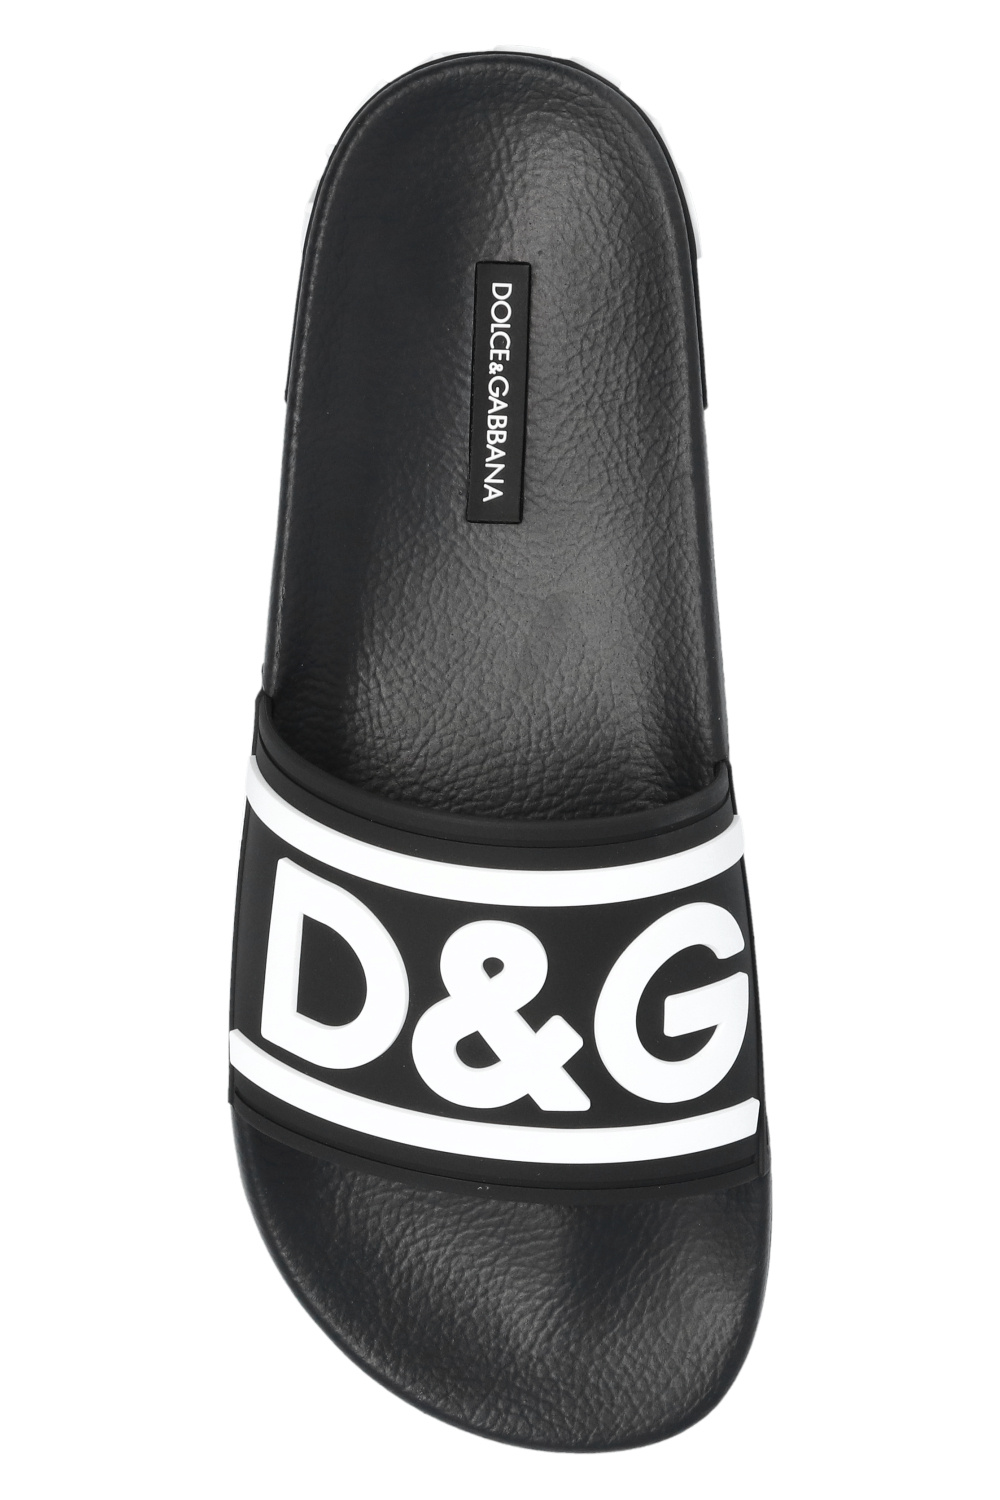 heeled sandals dolce gabbana shoes ‘Ciabatta’ slides with logo